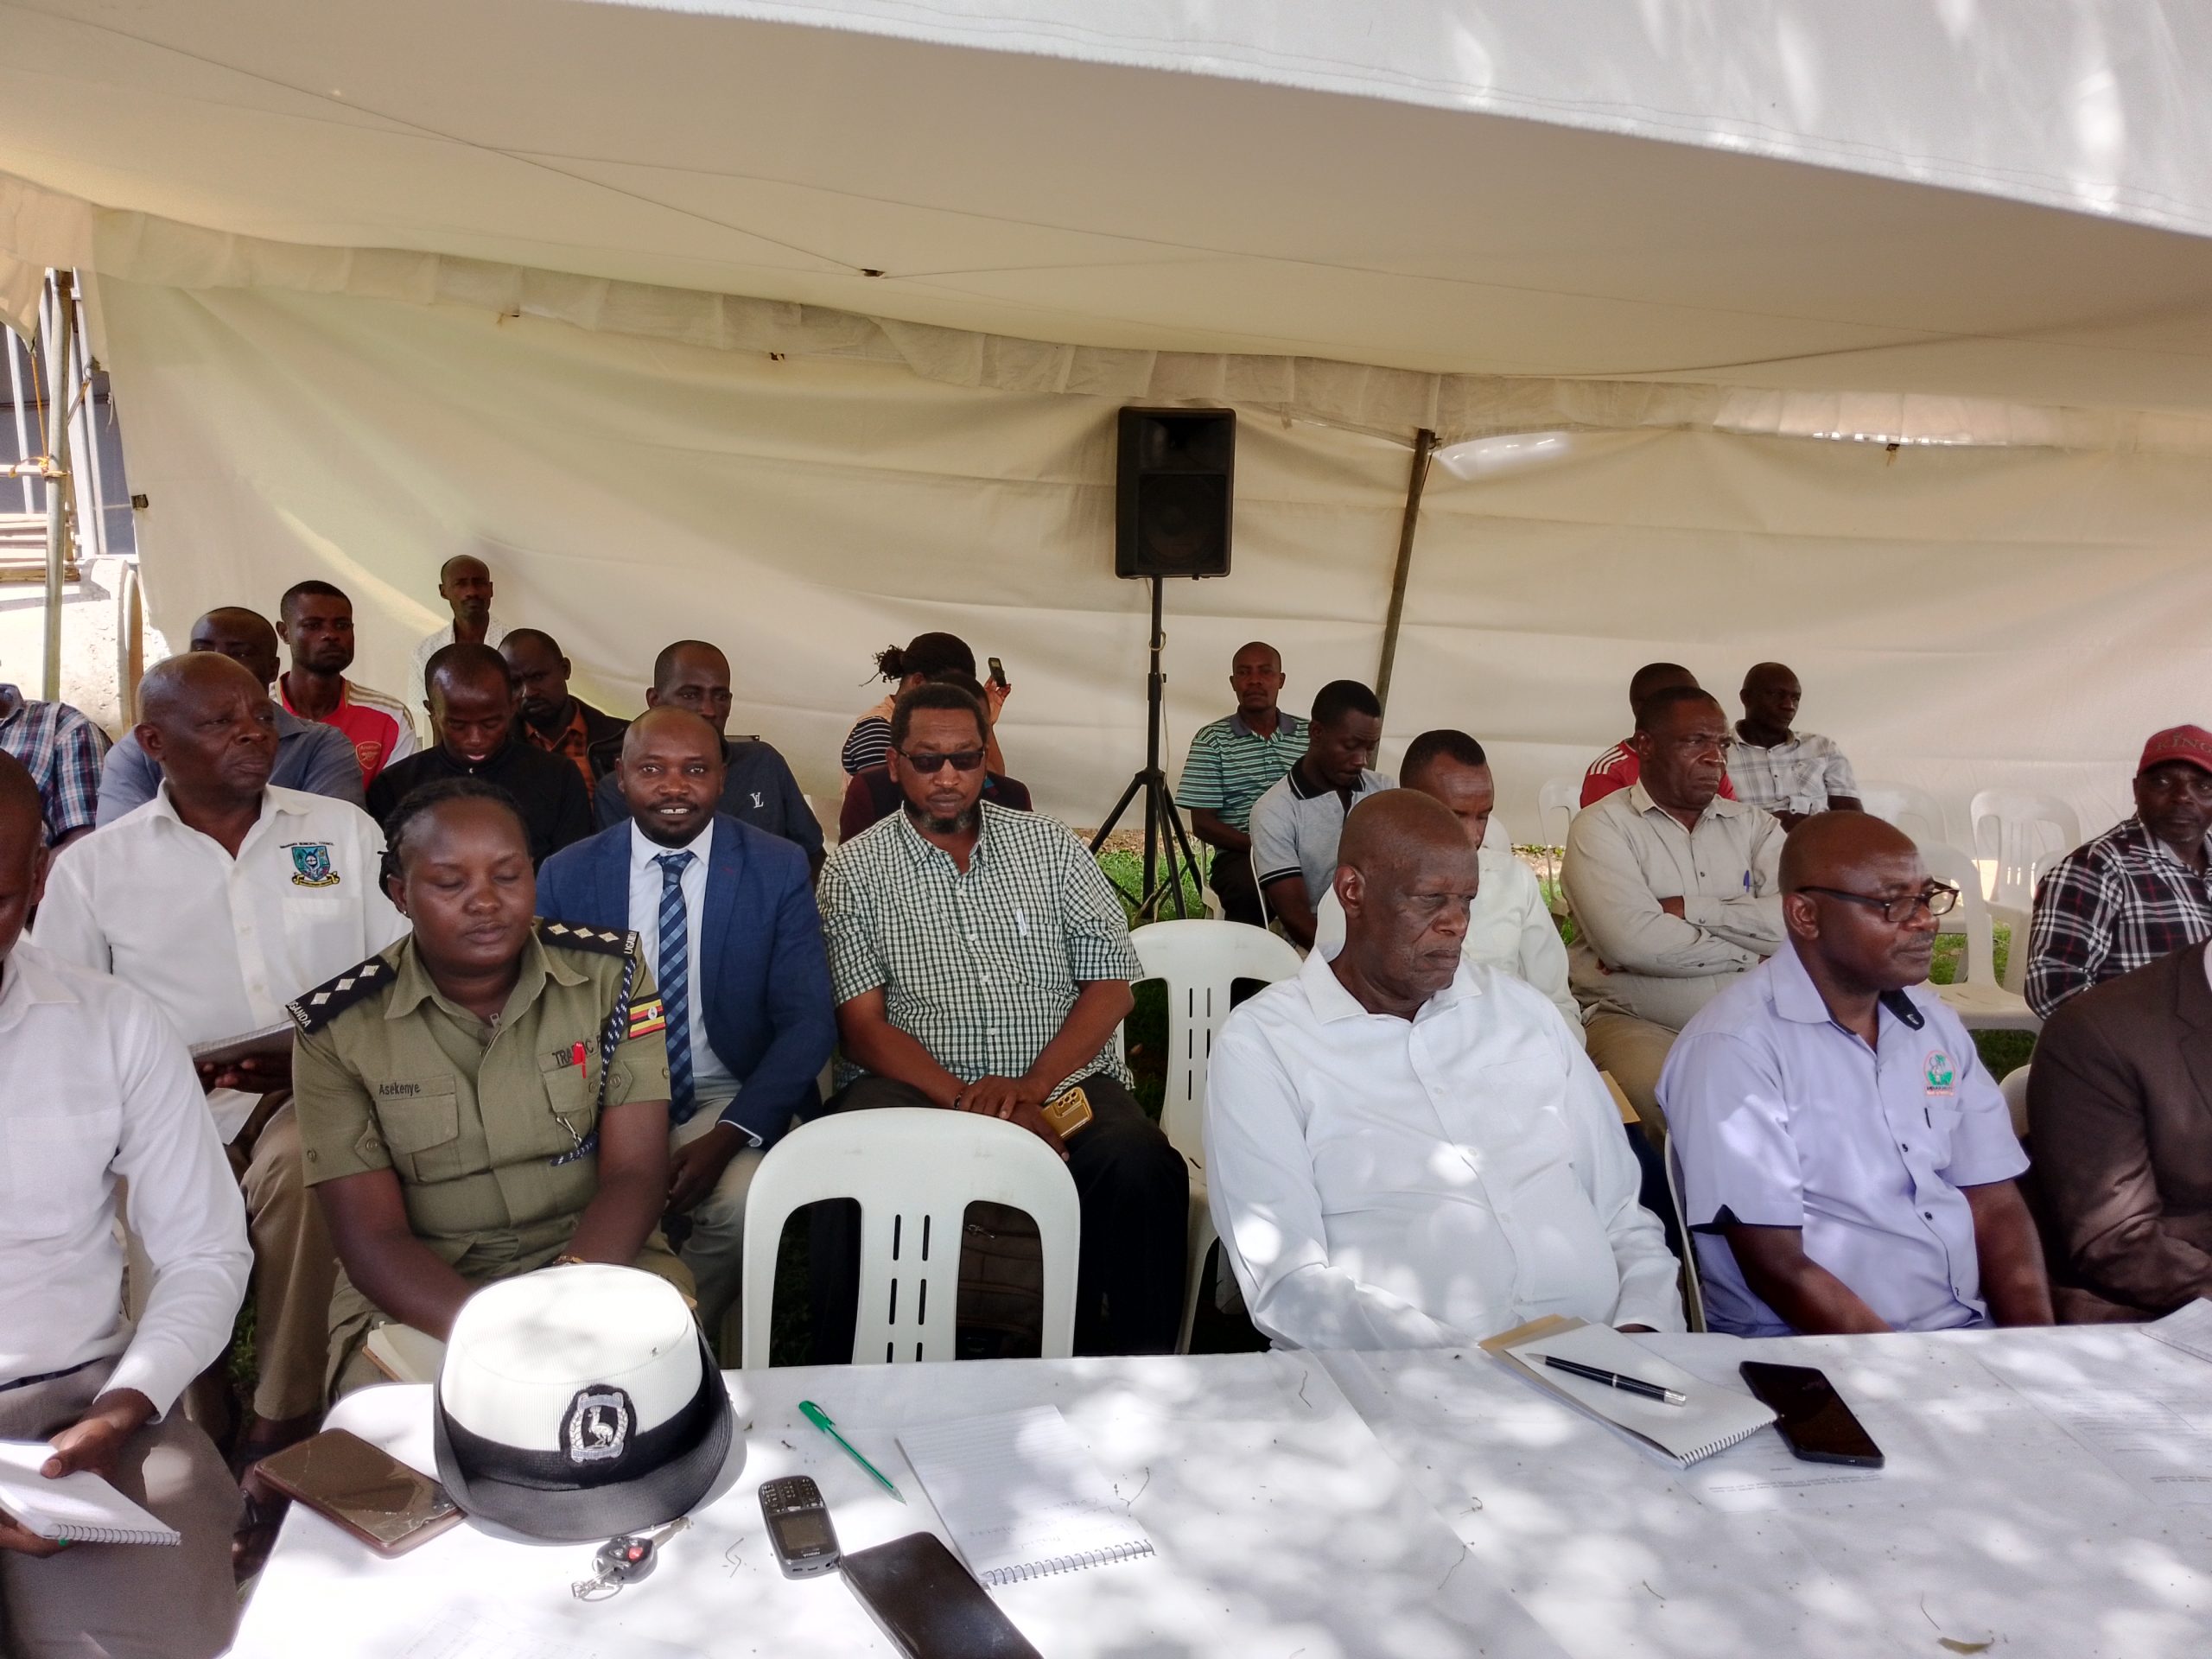 Wars between Boda boda, Tukutuku operators worries Mbarara city authorities